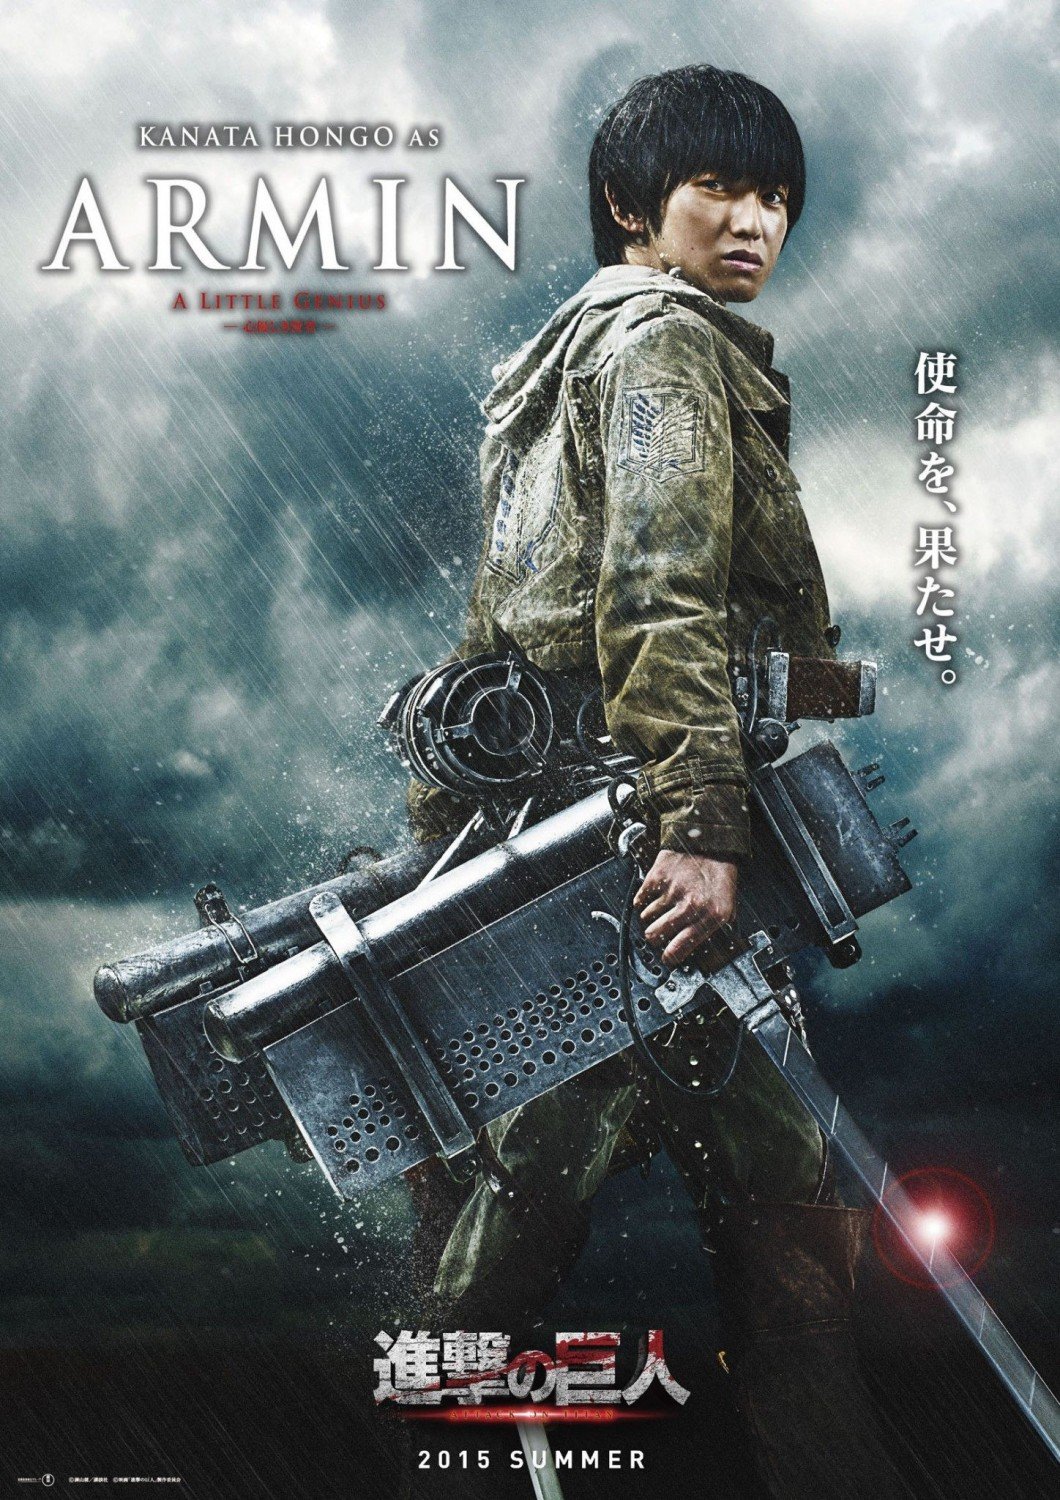 Attack On Titan: Fim do Mundo - Filme 2015 - AdoroCinema